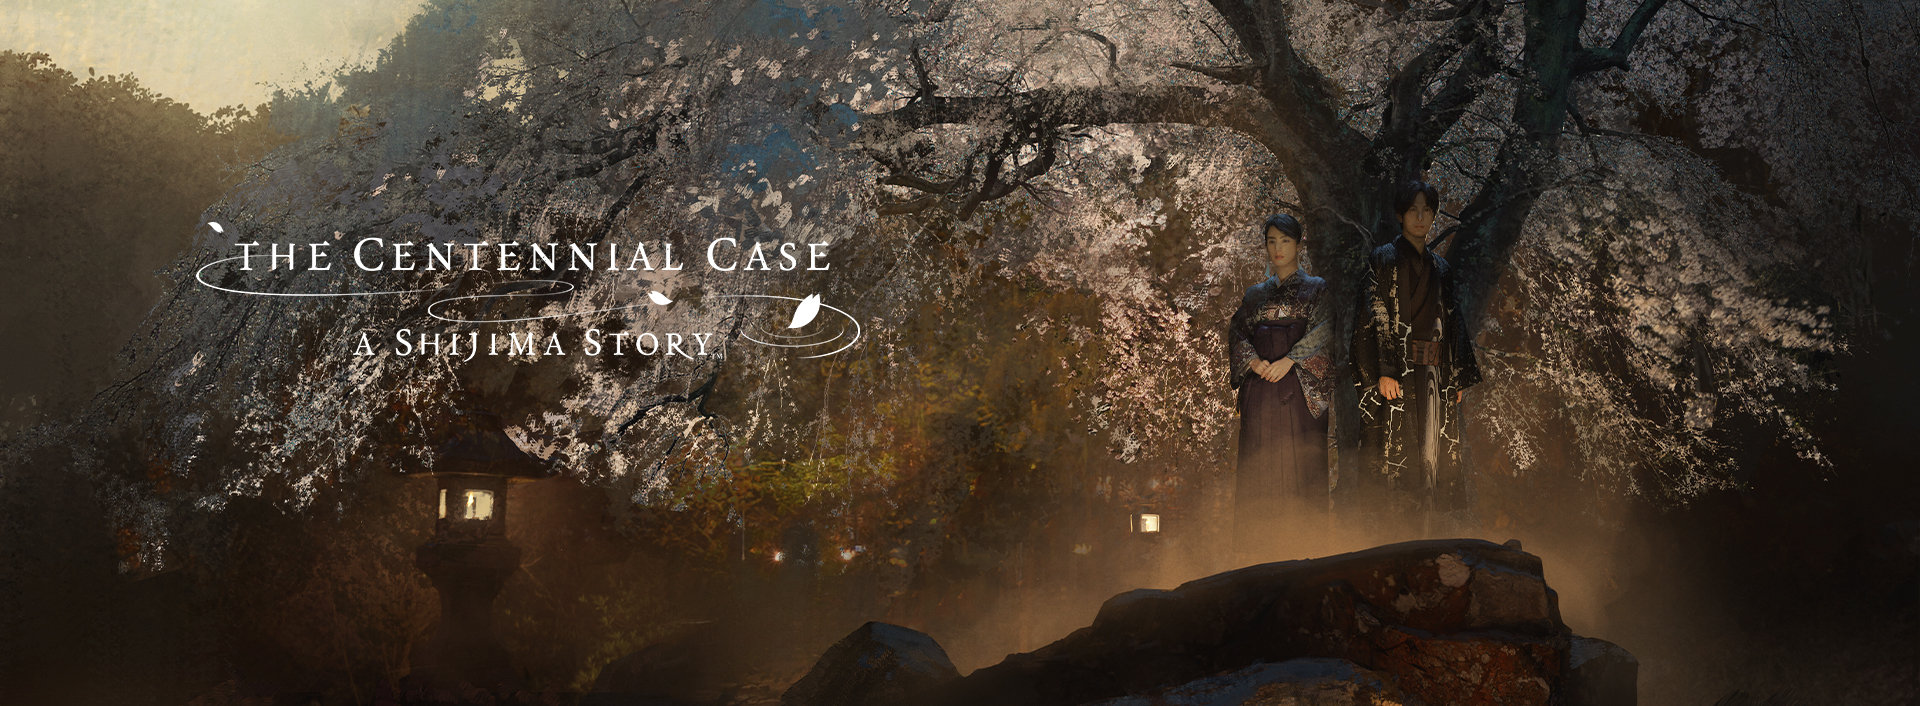 The Centennial Case: A Shijima Story - Announcement Trailer